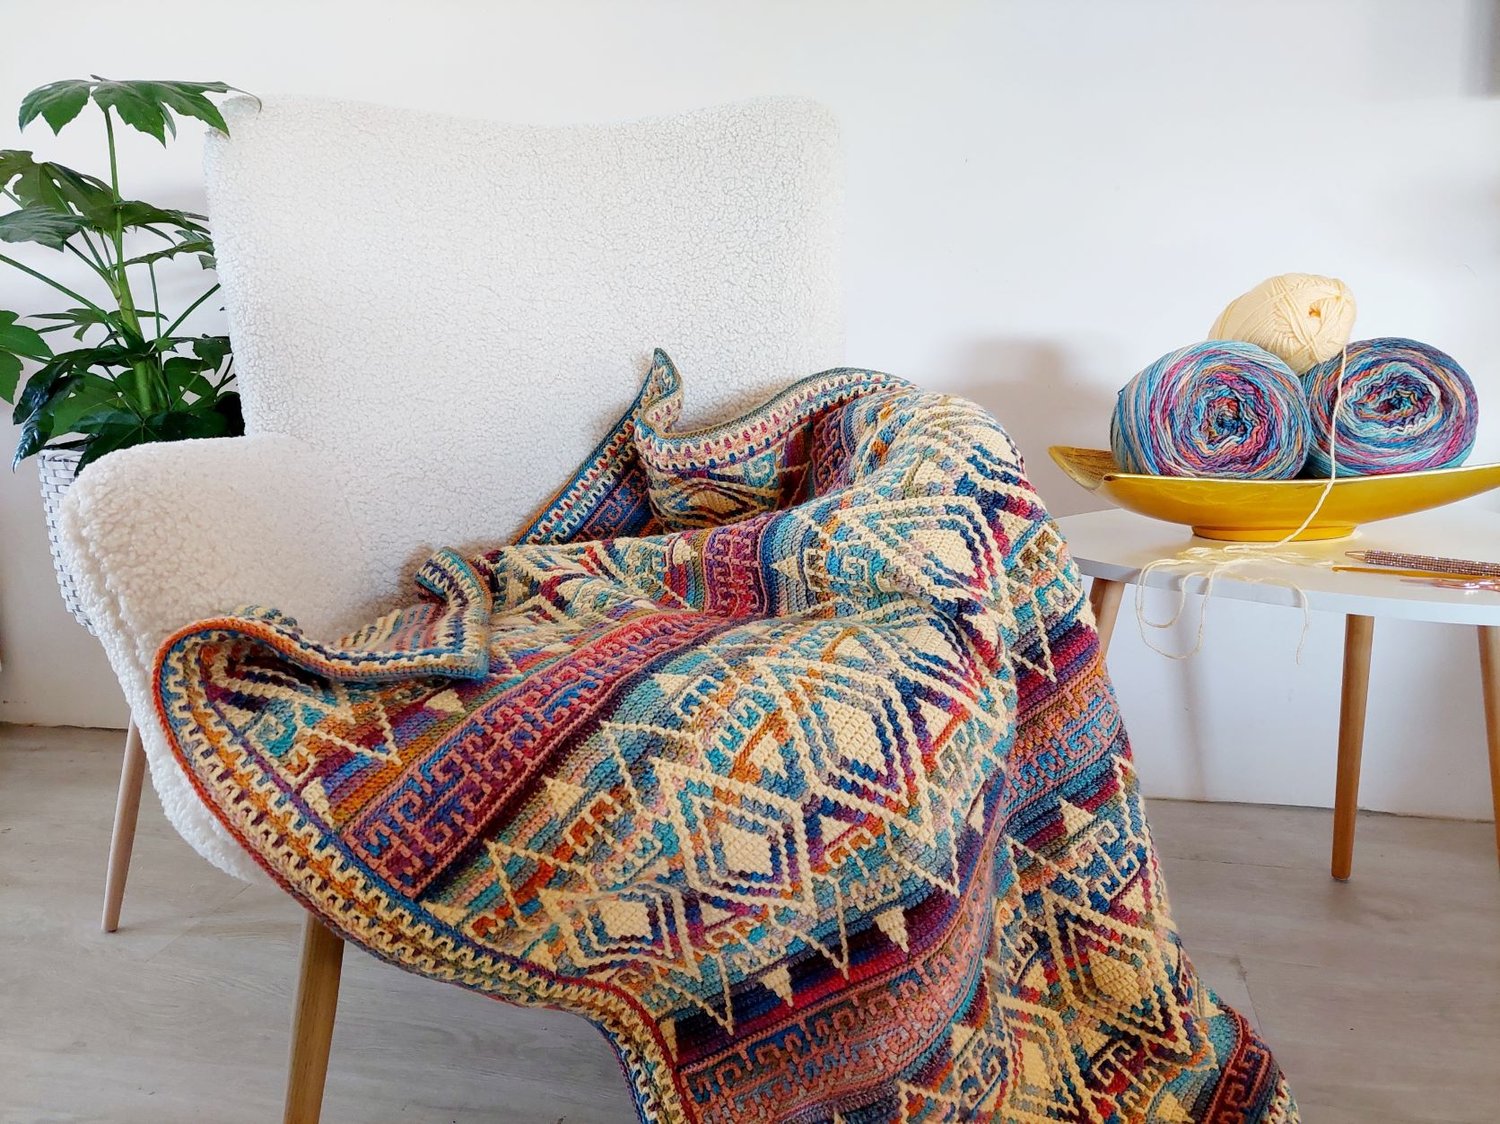 Magic Eye Throw Blanket Overlay Mosaic Crochet Pattern -   Crochet  stitches for blankets, Afghan crochet patterns, Mosaic